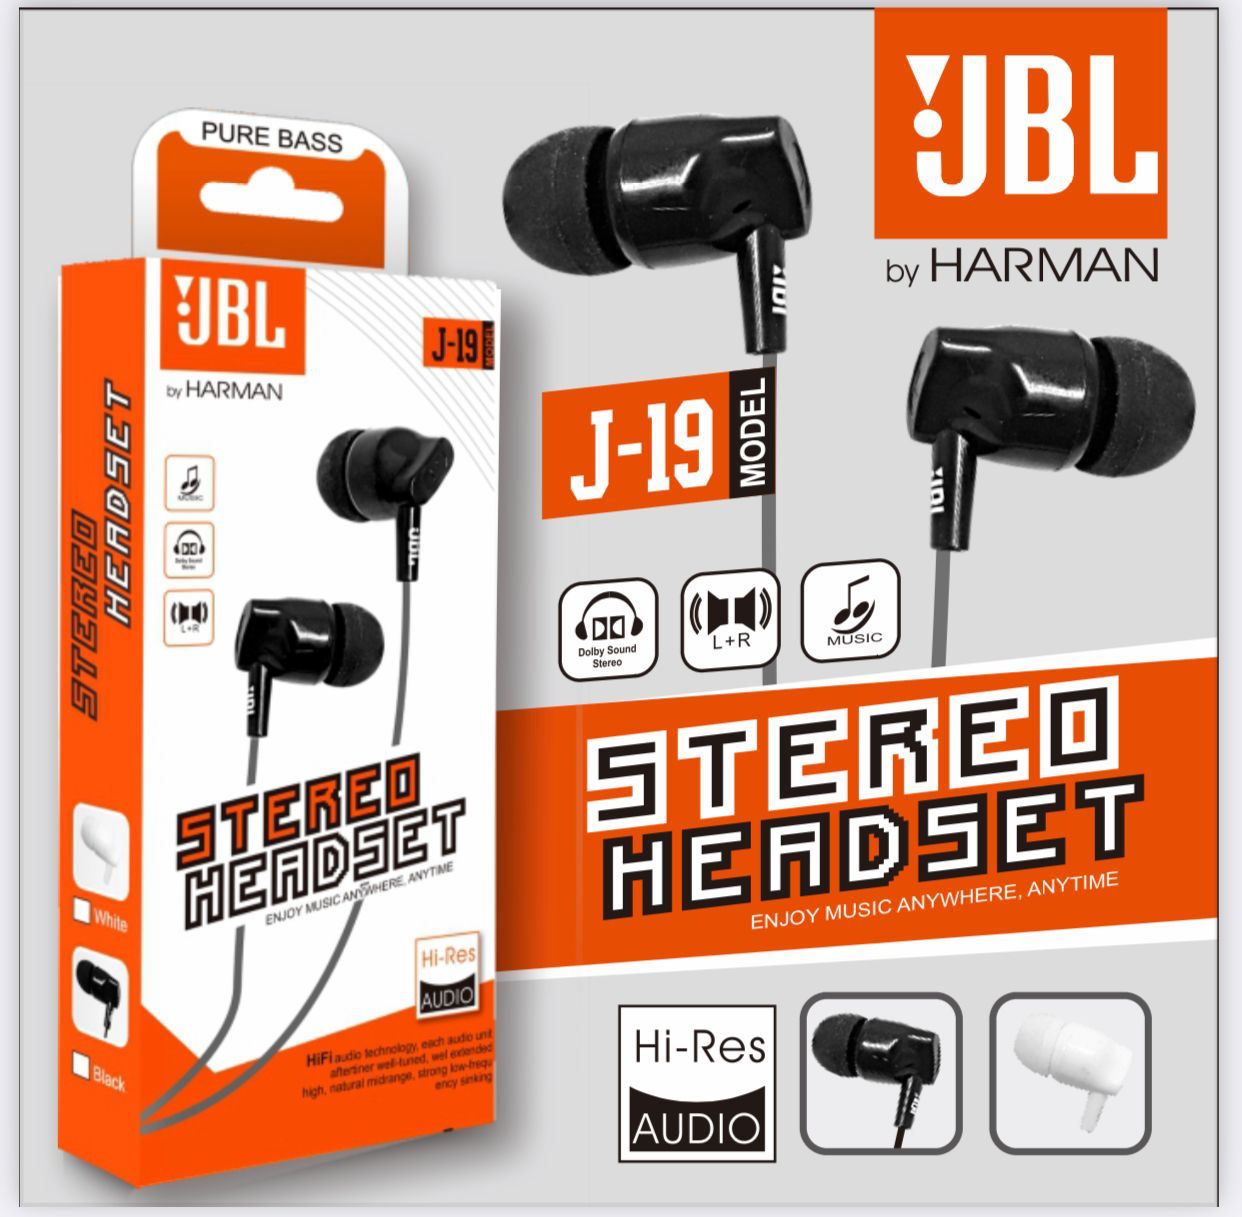 HEADSET JBL J 19 (NG) BY HERMAN